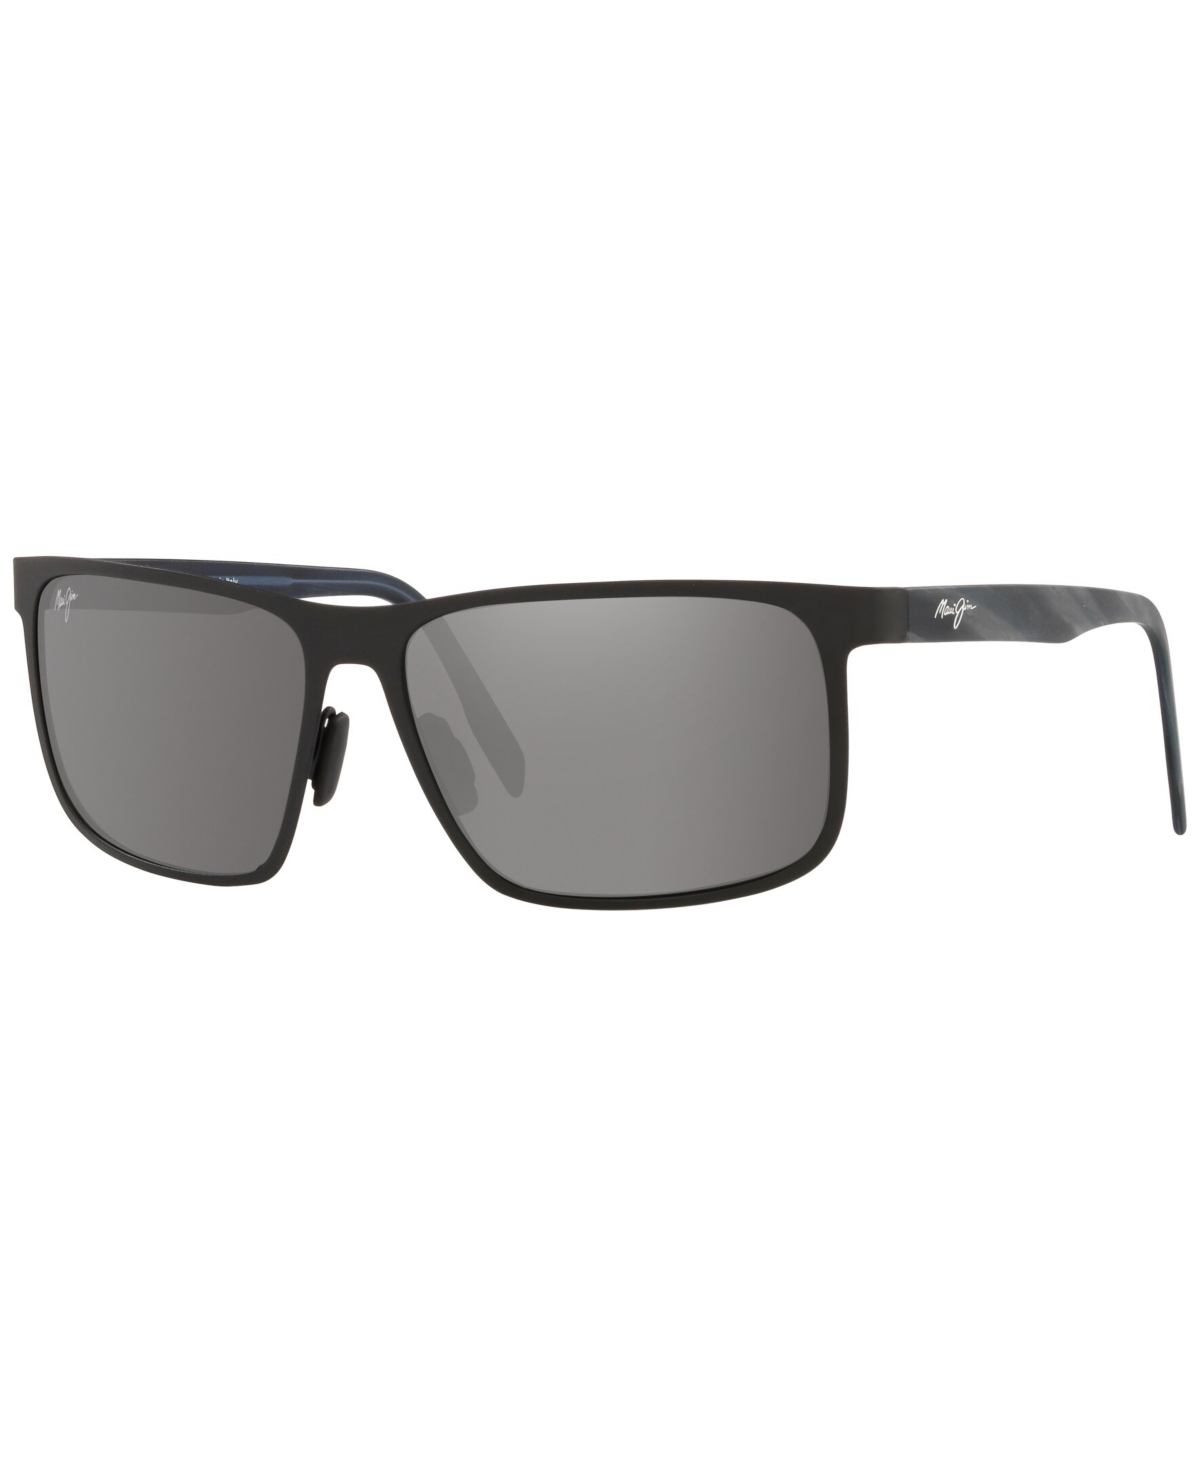 Men's Polarized Sunglasses, MJ000671 61 Wana - Gunmetal Dark